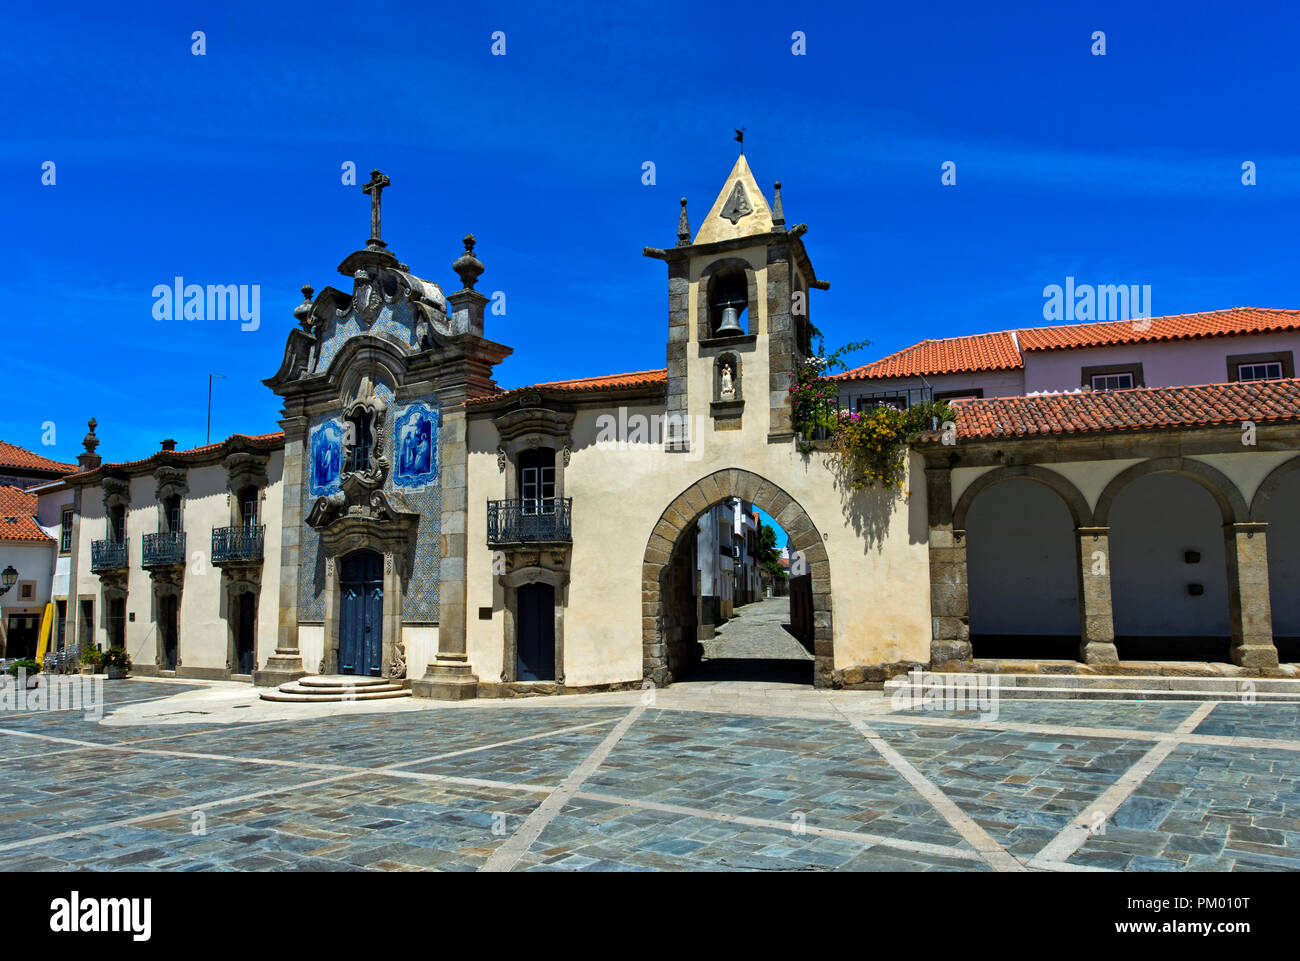 Capilla de la misericordia, Capela da Misericórdia, y la puerta de la ciudad, Sao Joao da Pesqueira, Portugal Foto de stock